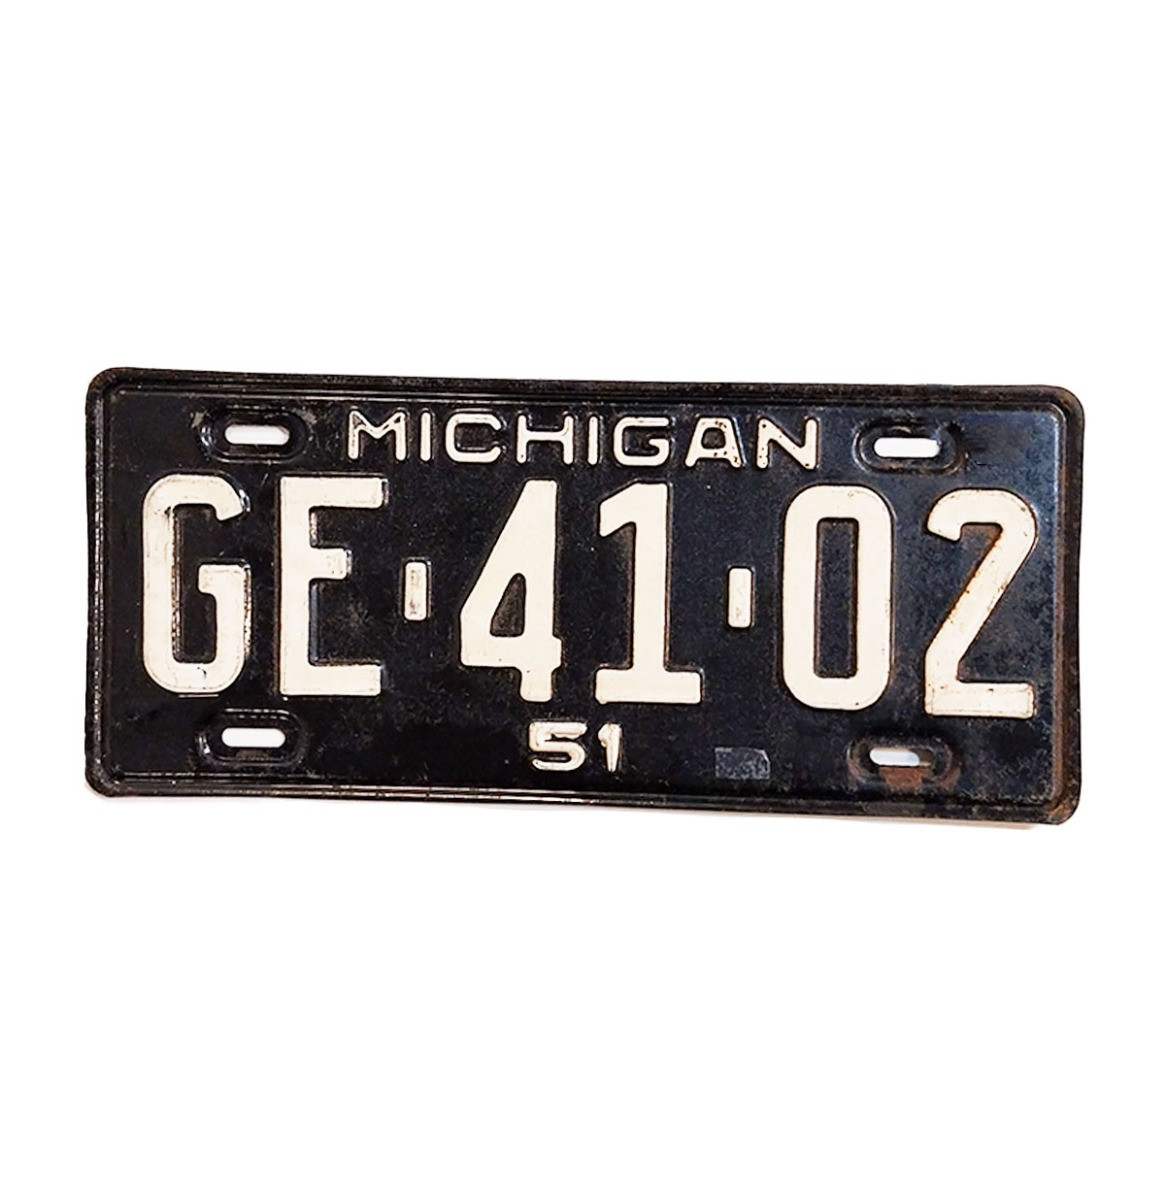 Michigan Kentekenplaat - 1951 - Origineel Amerikaans